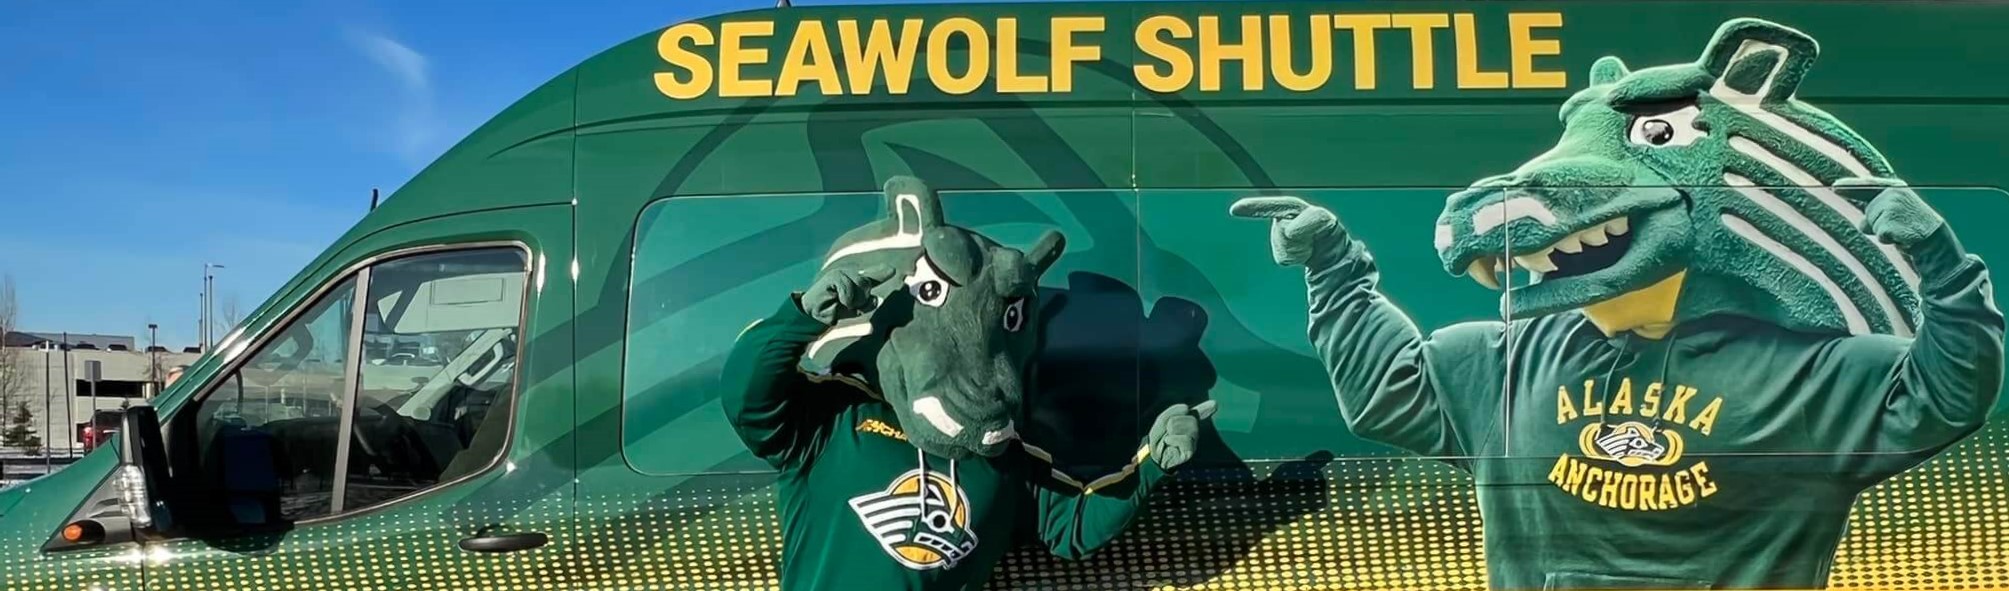 Seawolf Shuttle and Mascot